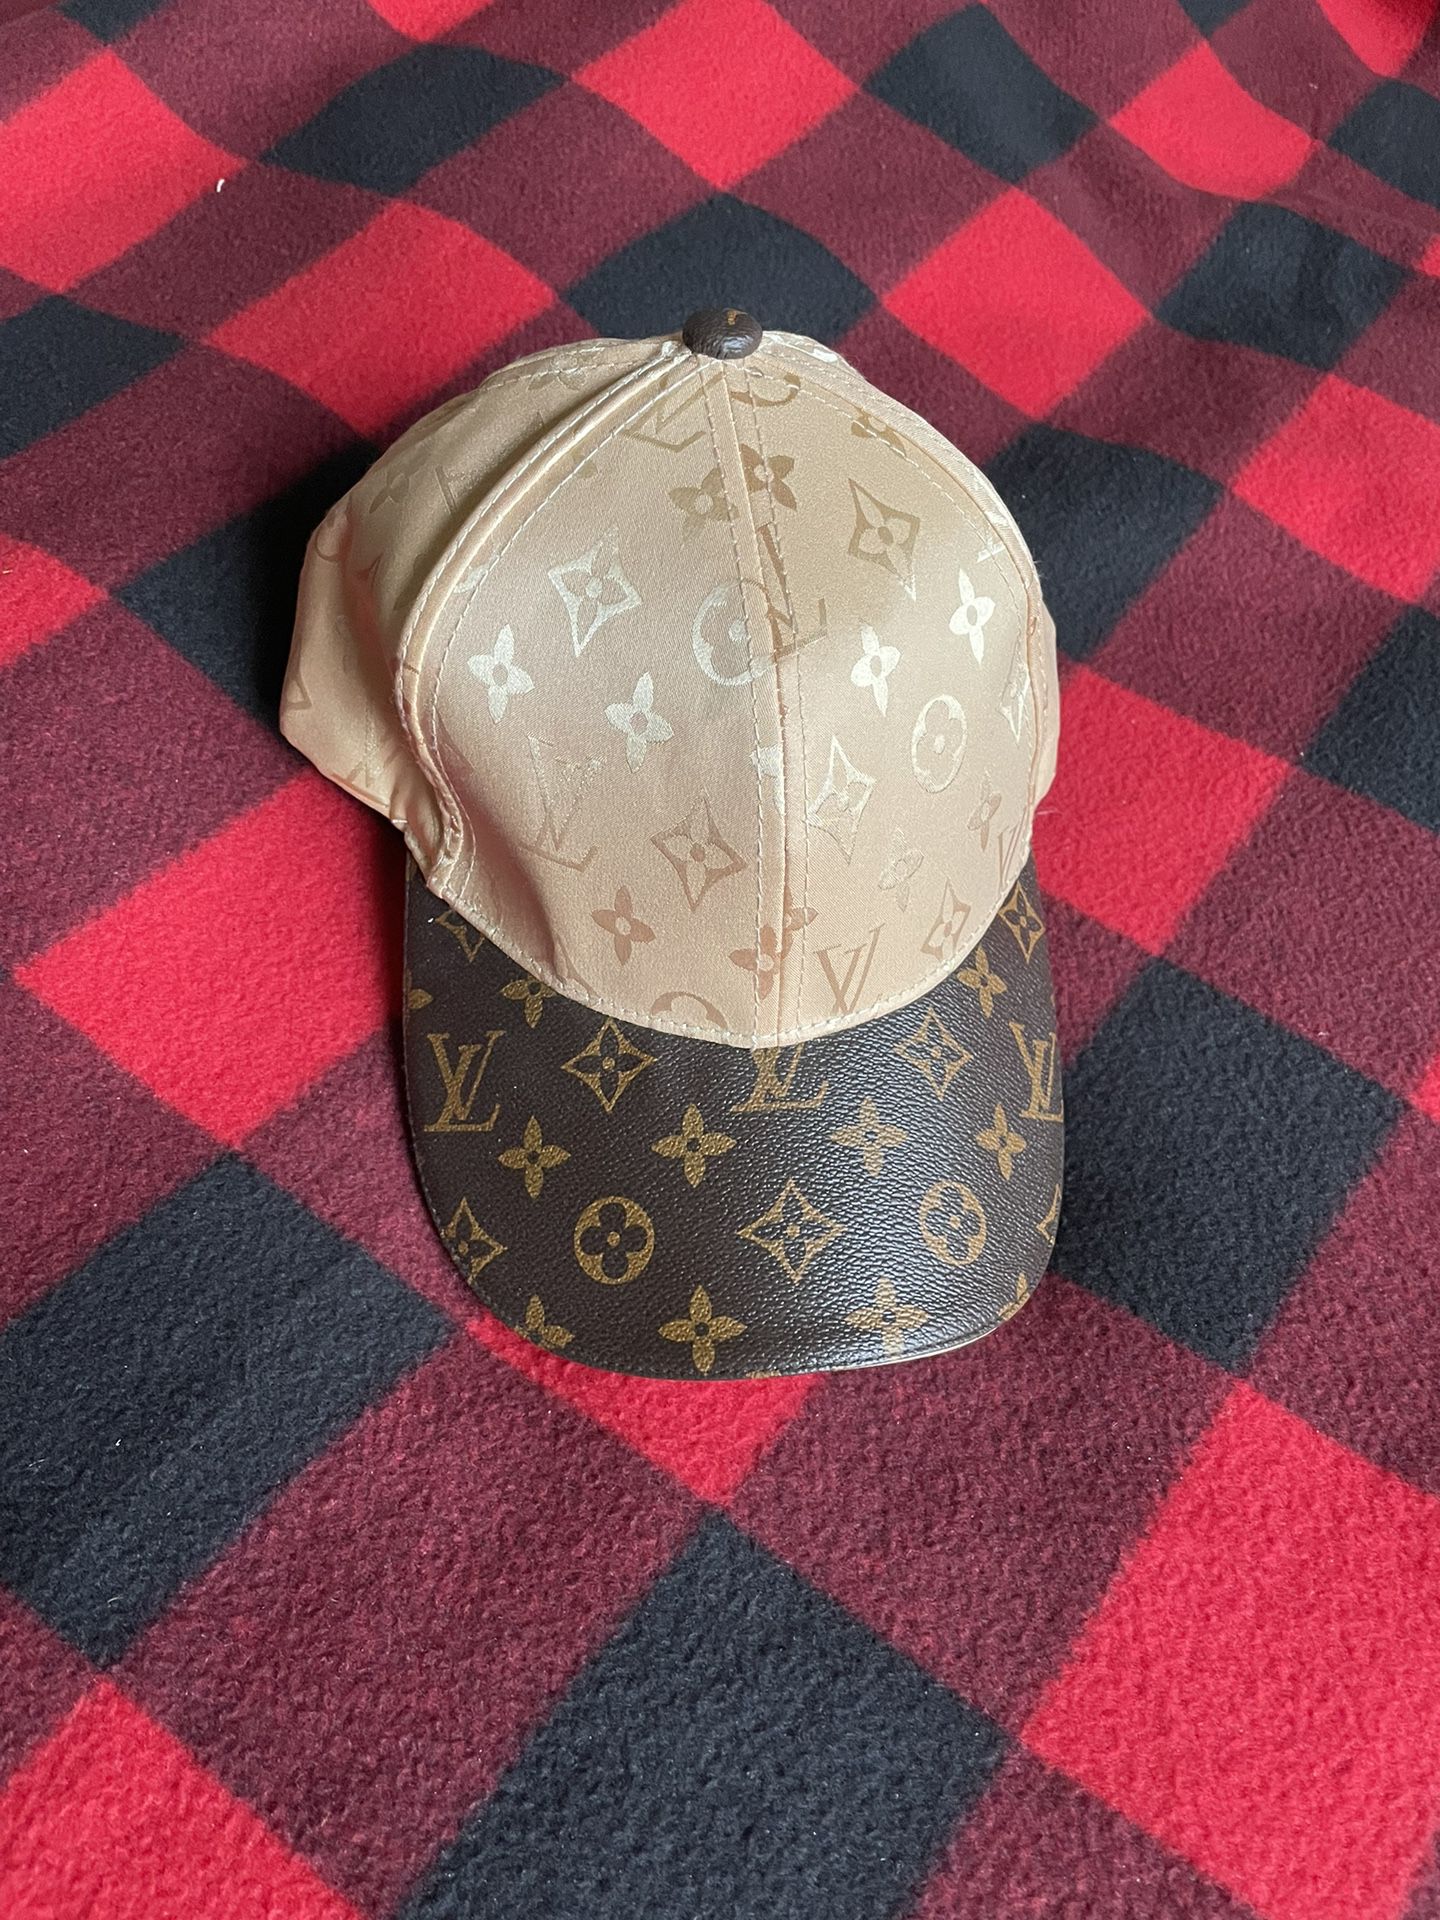 LV - Louis Vuitton Monogram Hat - Authentic for Sale in Lenexa, KS - OfferUp